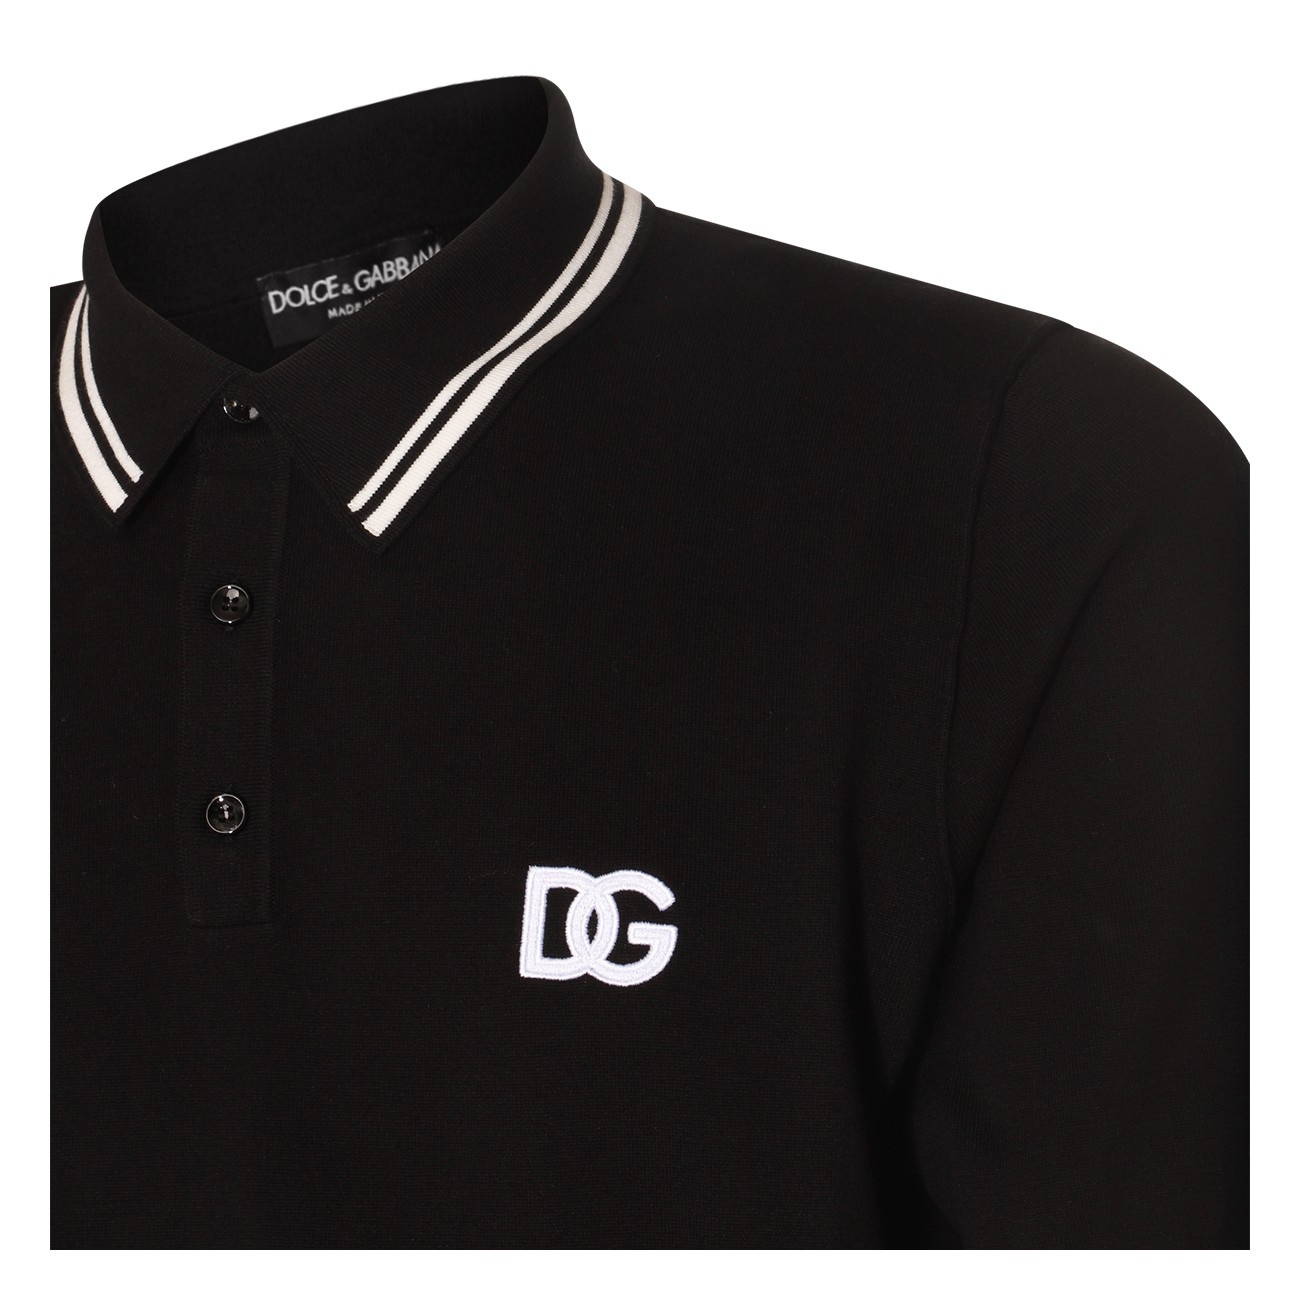 black and white cotton blend polo shirt - 3